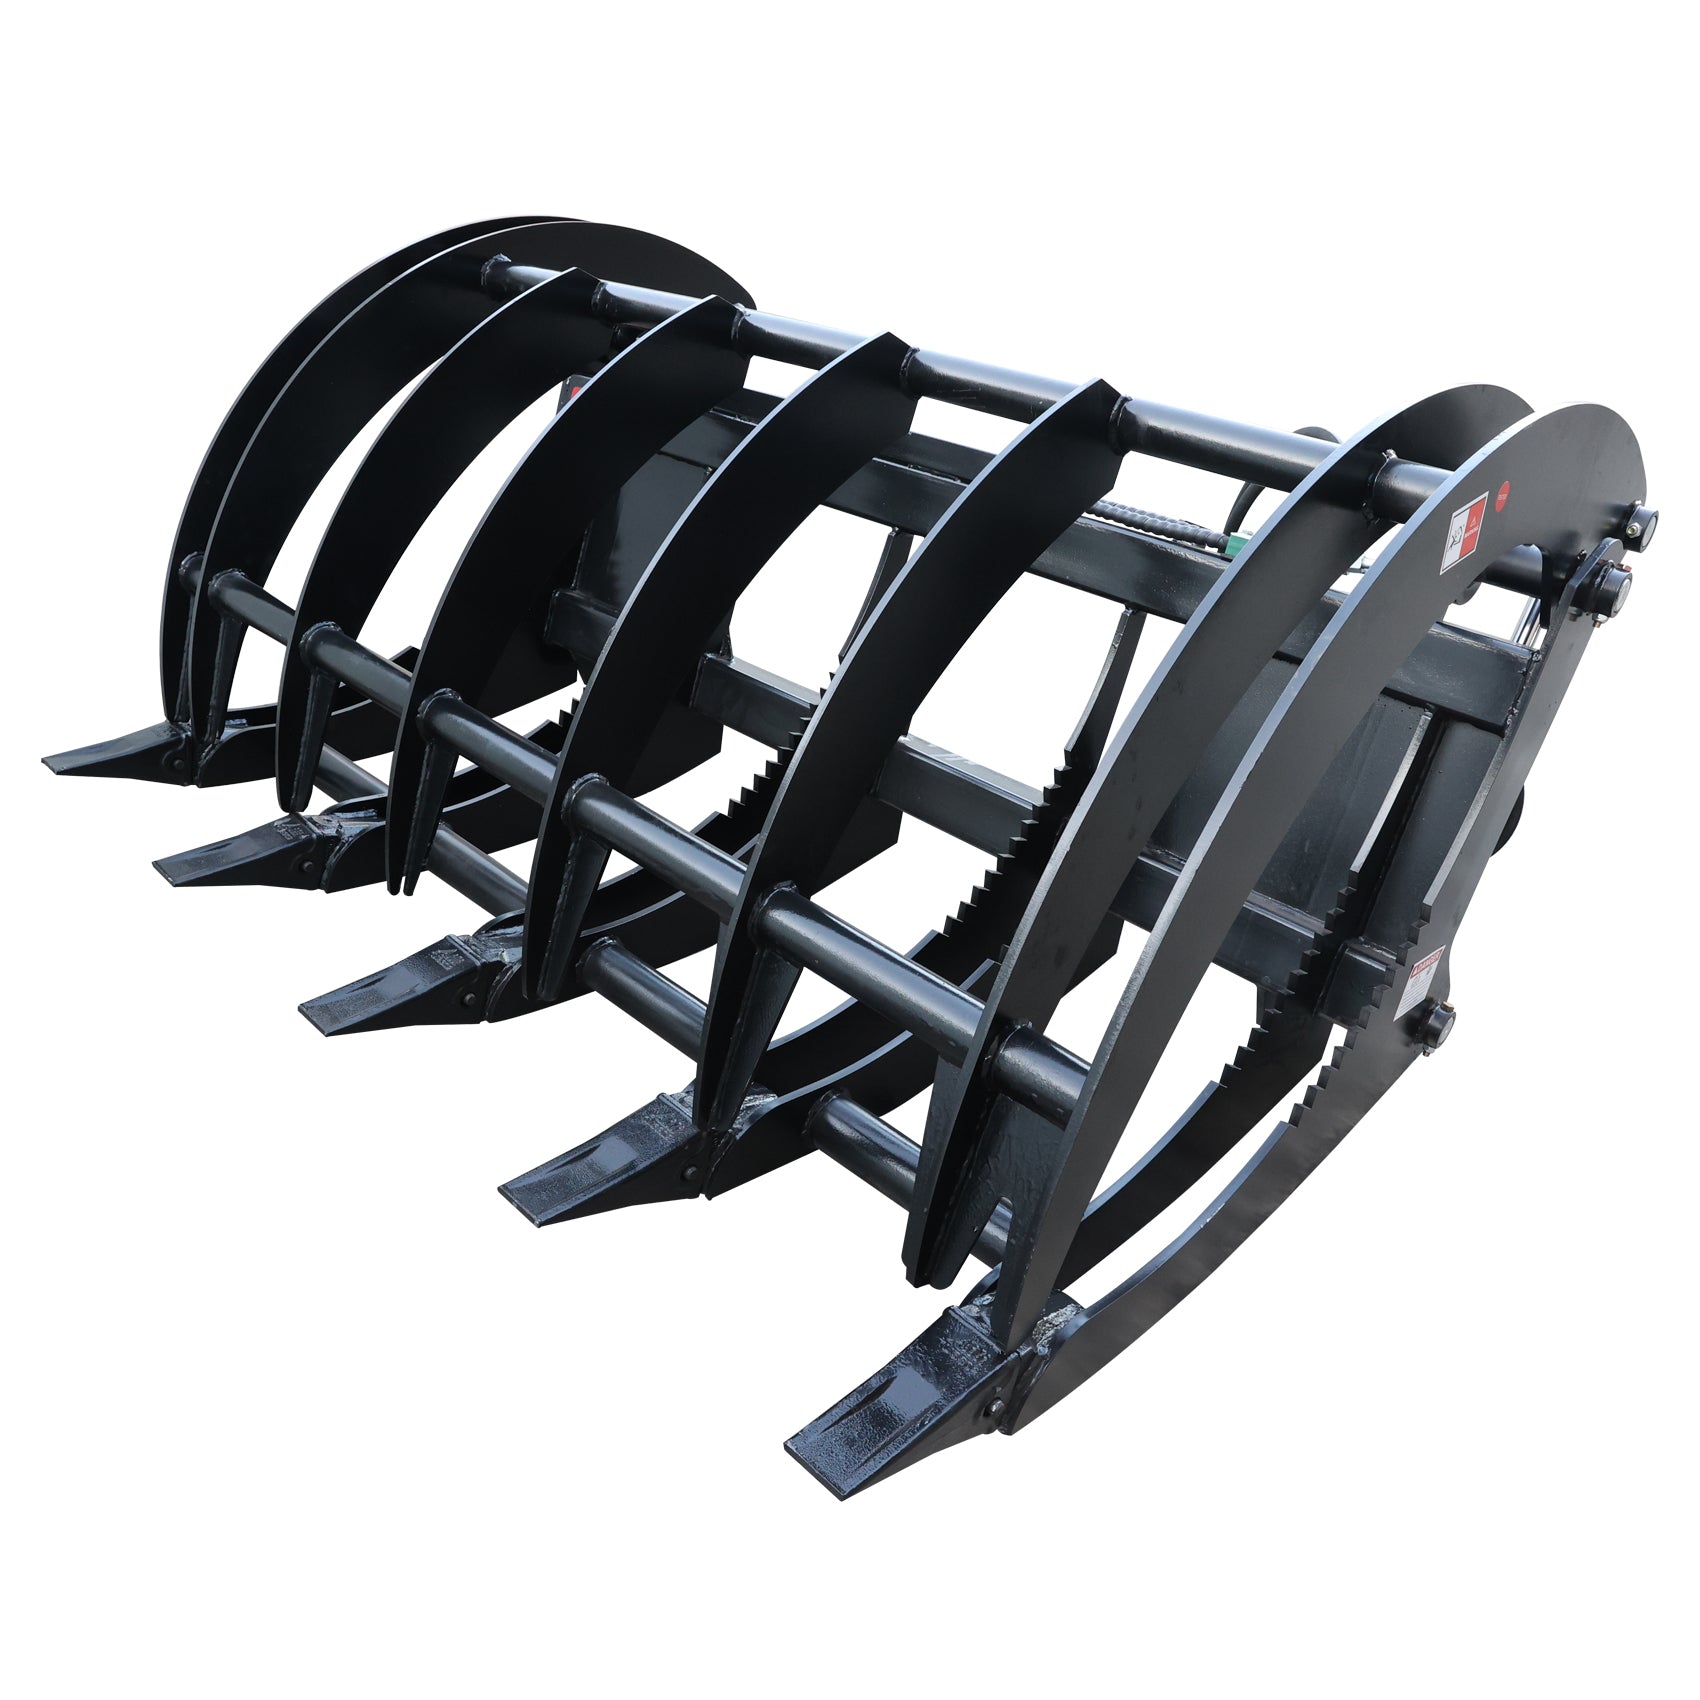 Landy Attachments 72'' Extreme Grapple Rake Skid Steer Attachment, Universal Mount